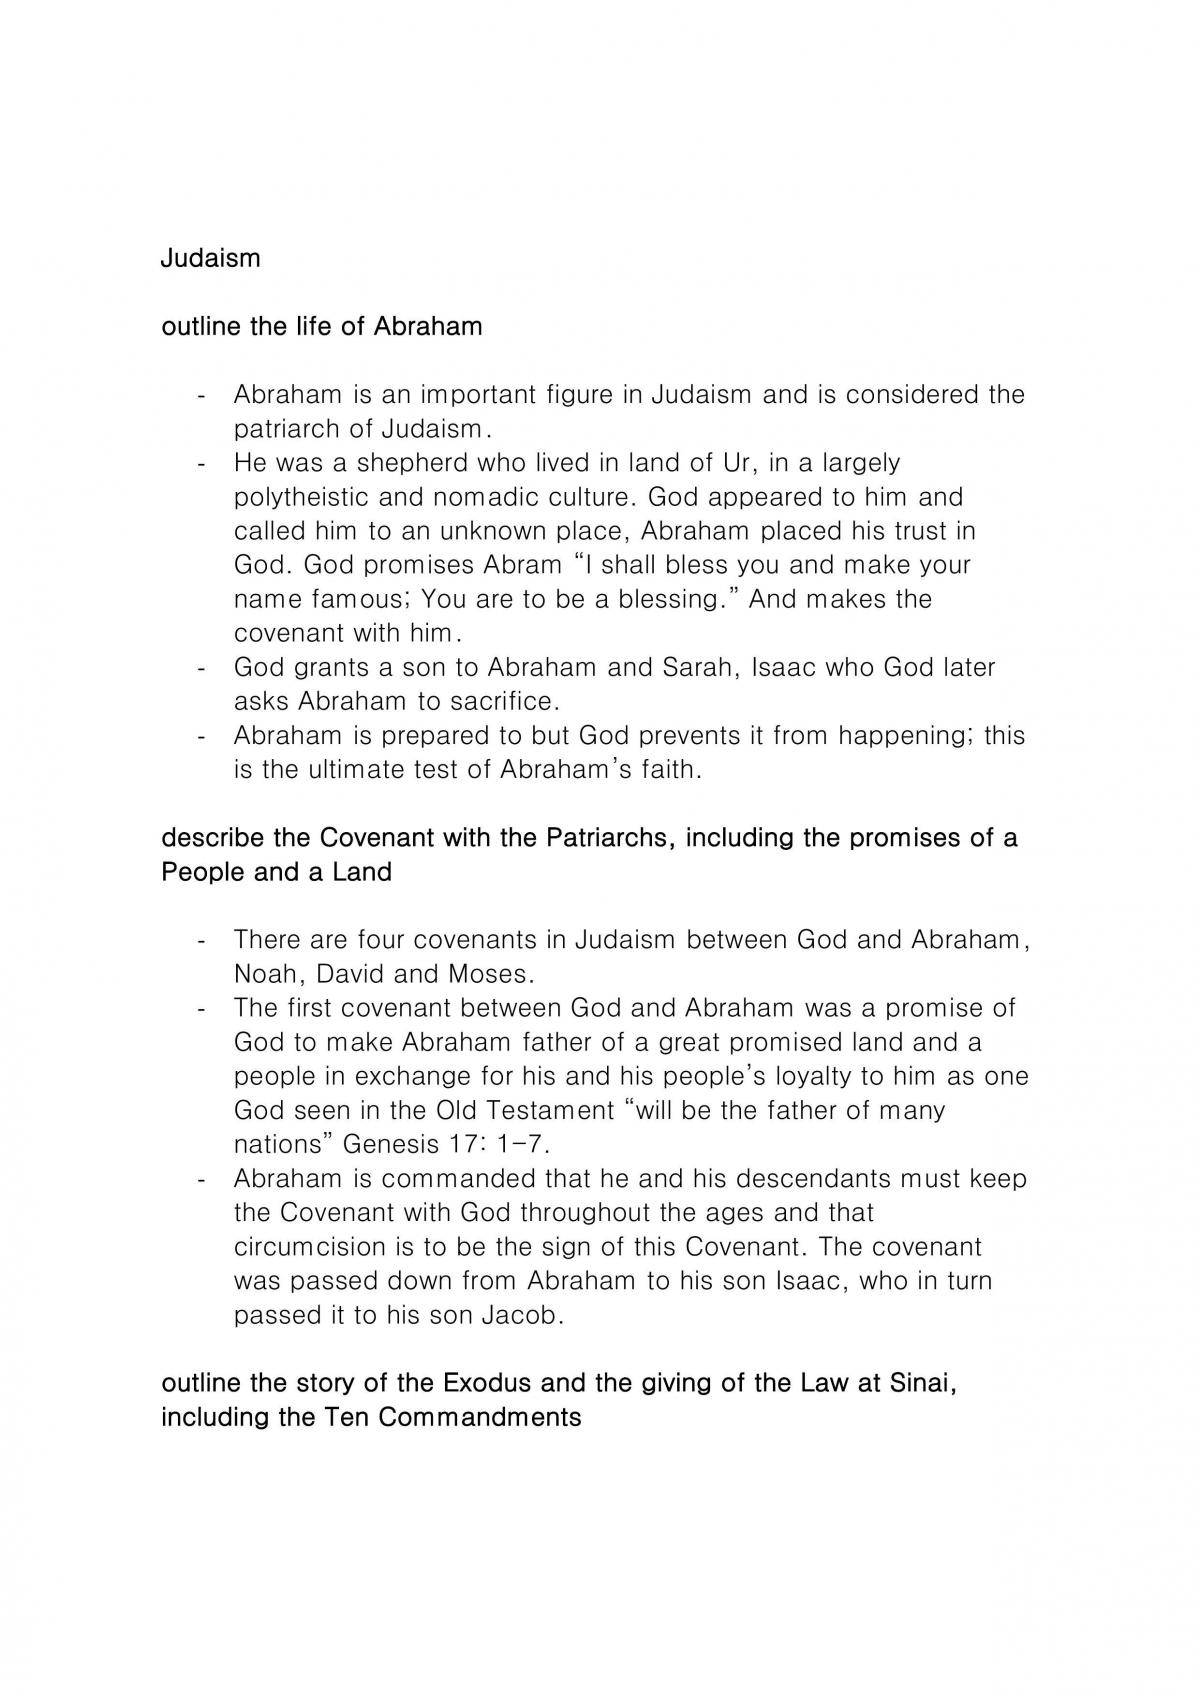 SOR II Full Syllabus Notes: Christianity, Islam, Judiasm - Page 15